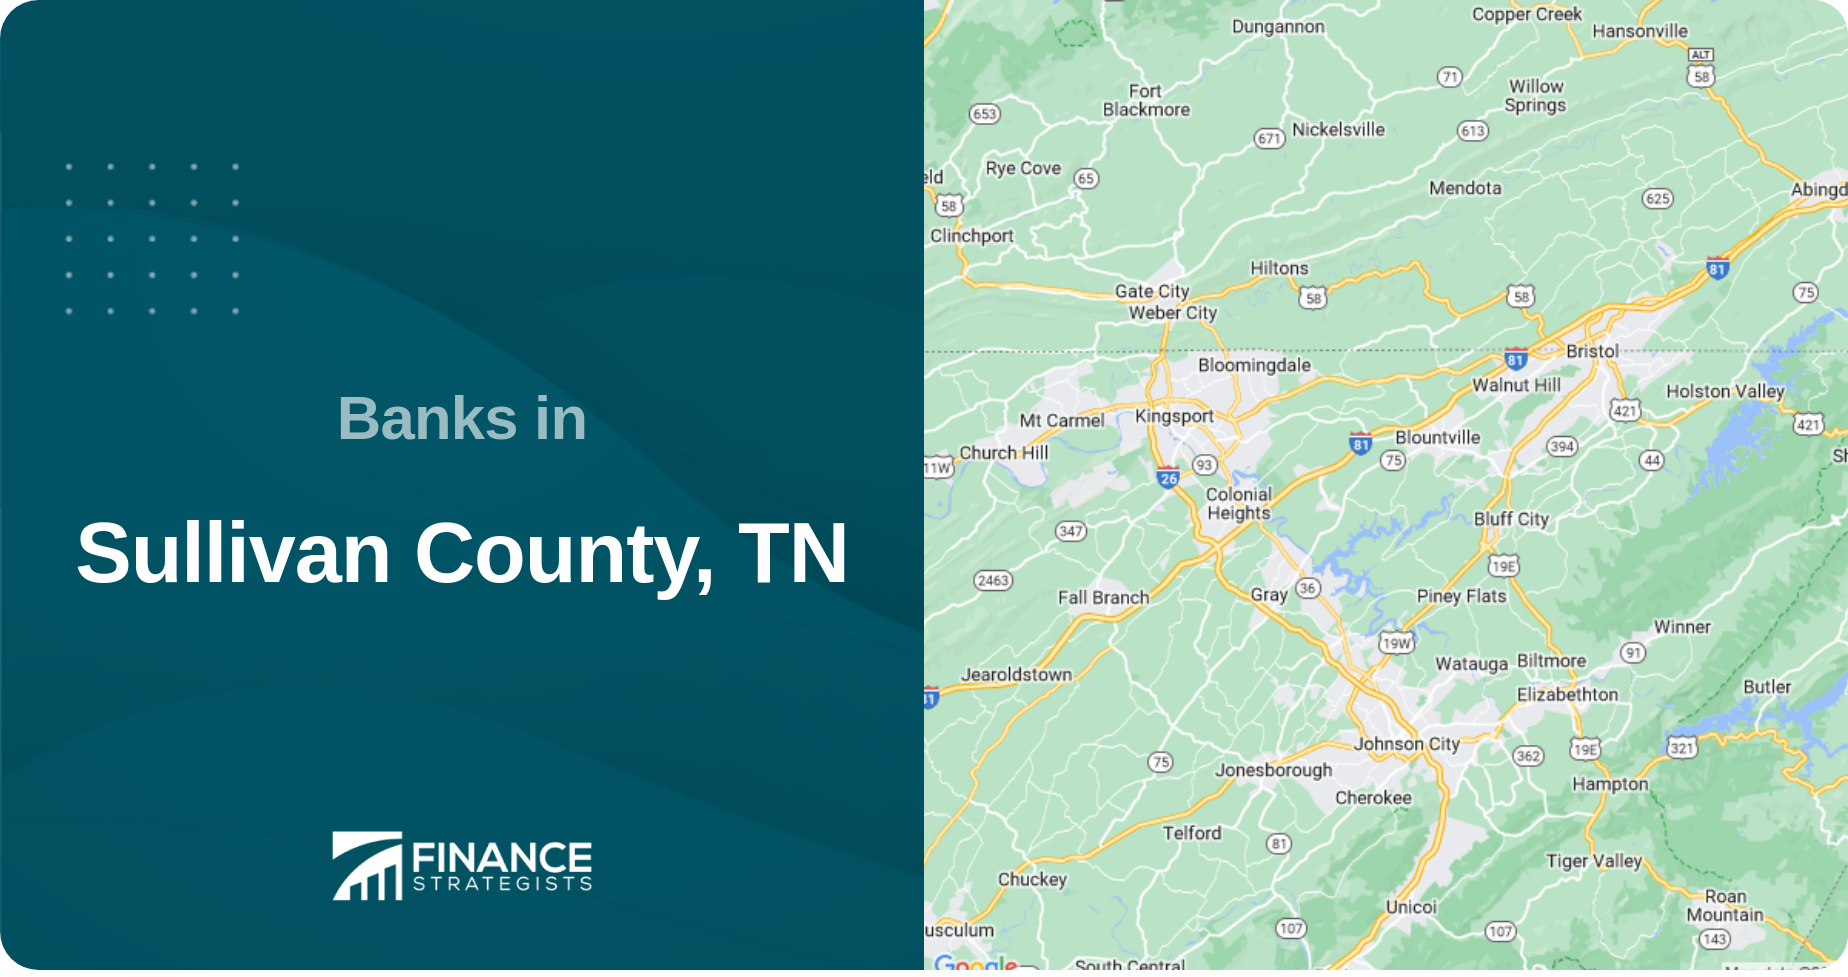 Banks in Sullivan County, TN